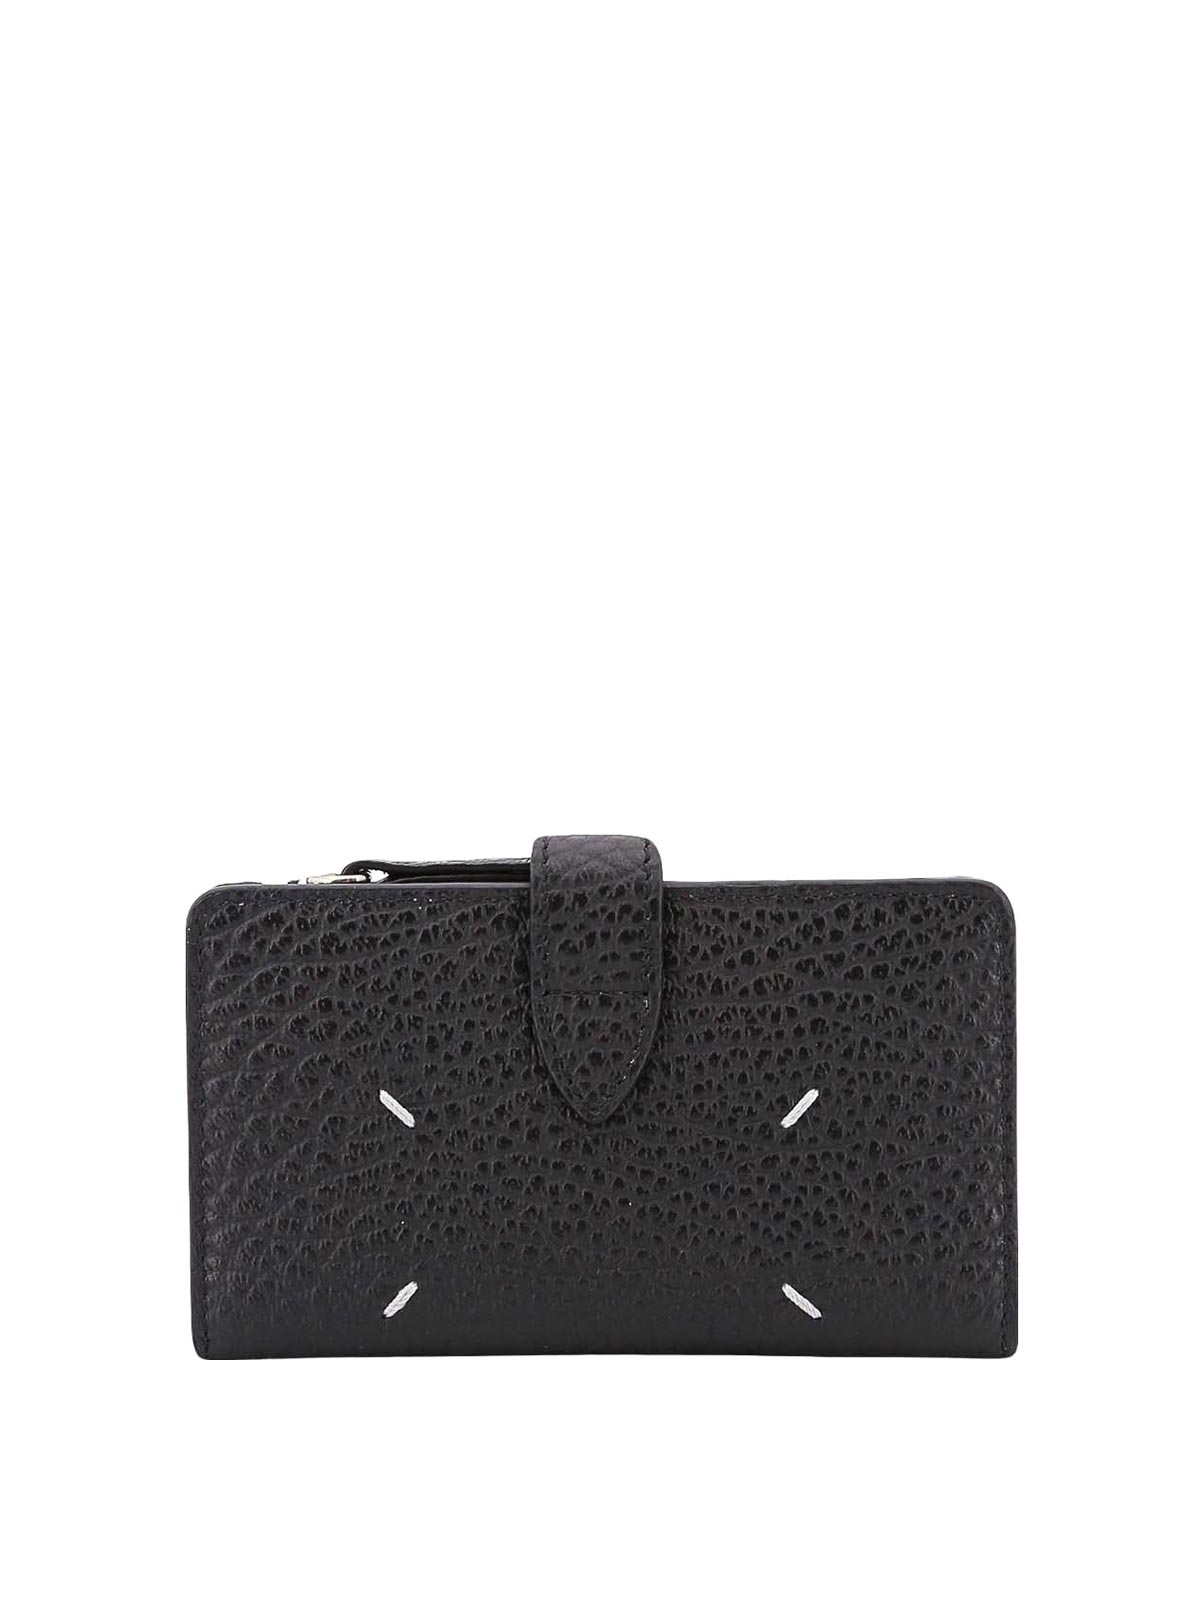 Maison Margiela Leather Card Holder With Iconic Stitching In Black